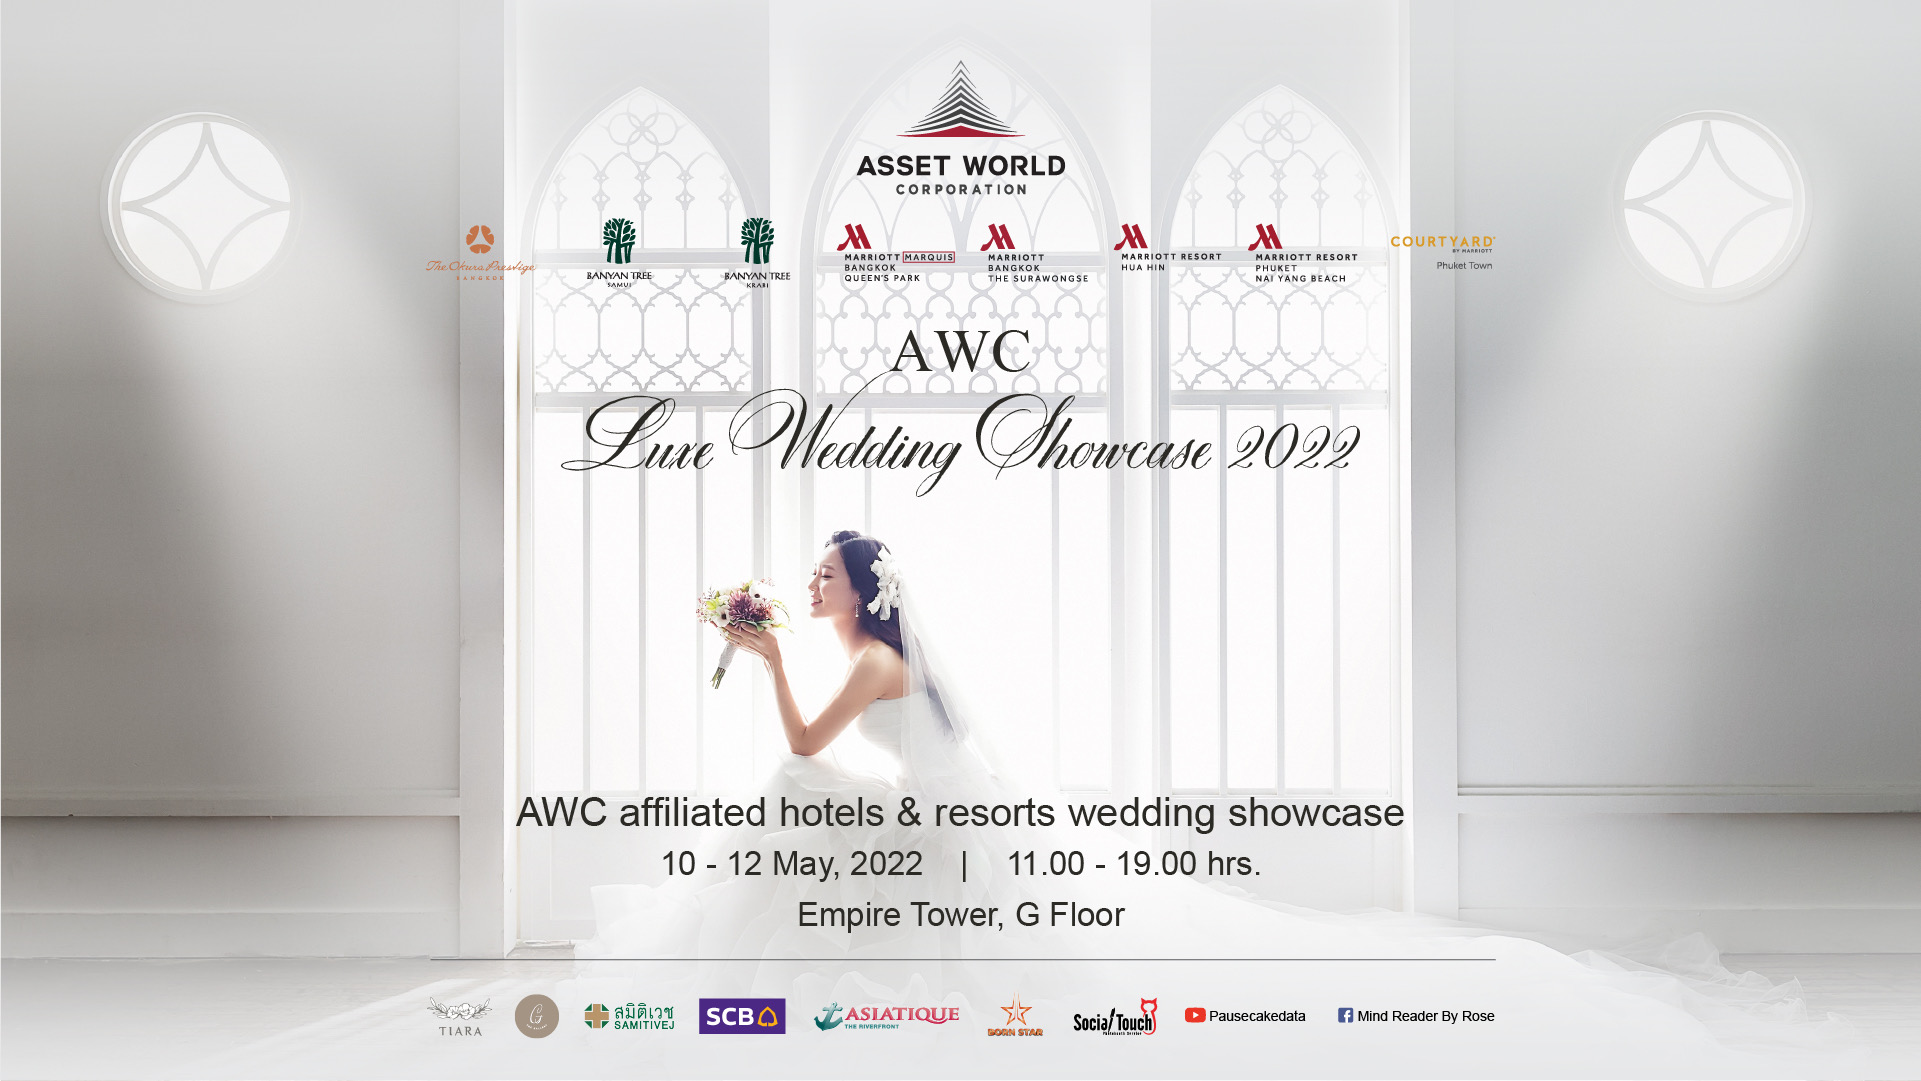 “AWC” ชวนคู่รักร่วมงาน “AWC Luxe Wedding Showcase 2022” ช่วง 10-12 พ.ค.นี้